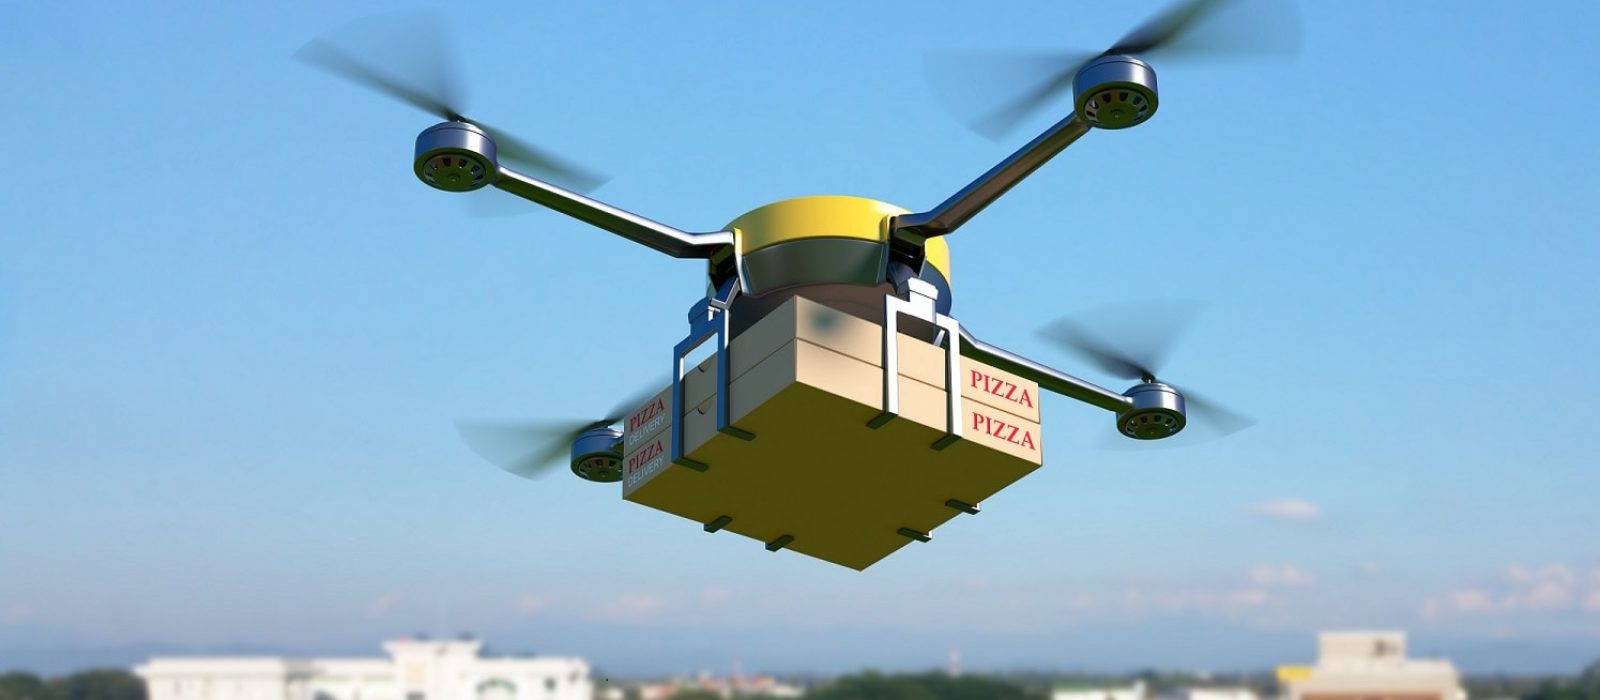 Pizza-Lieferung-per-Drohne